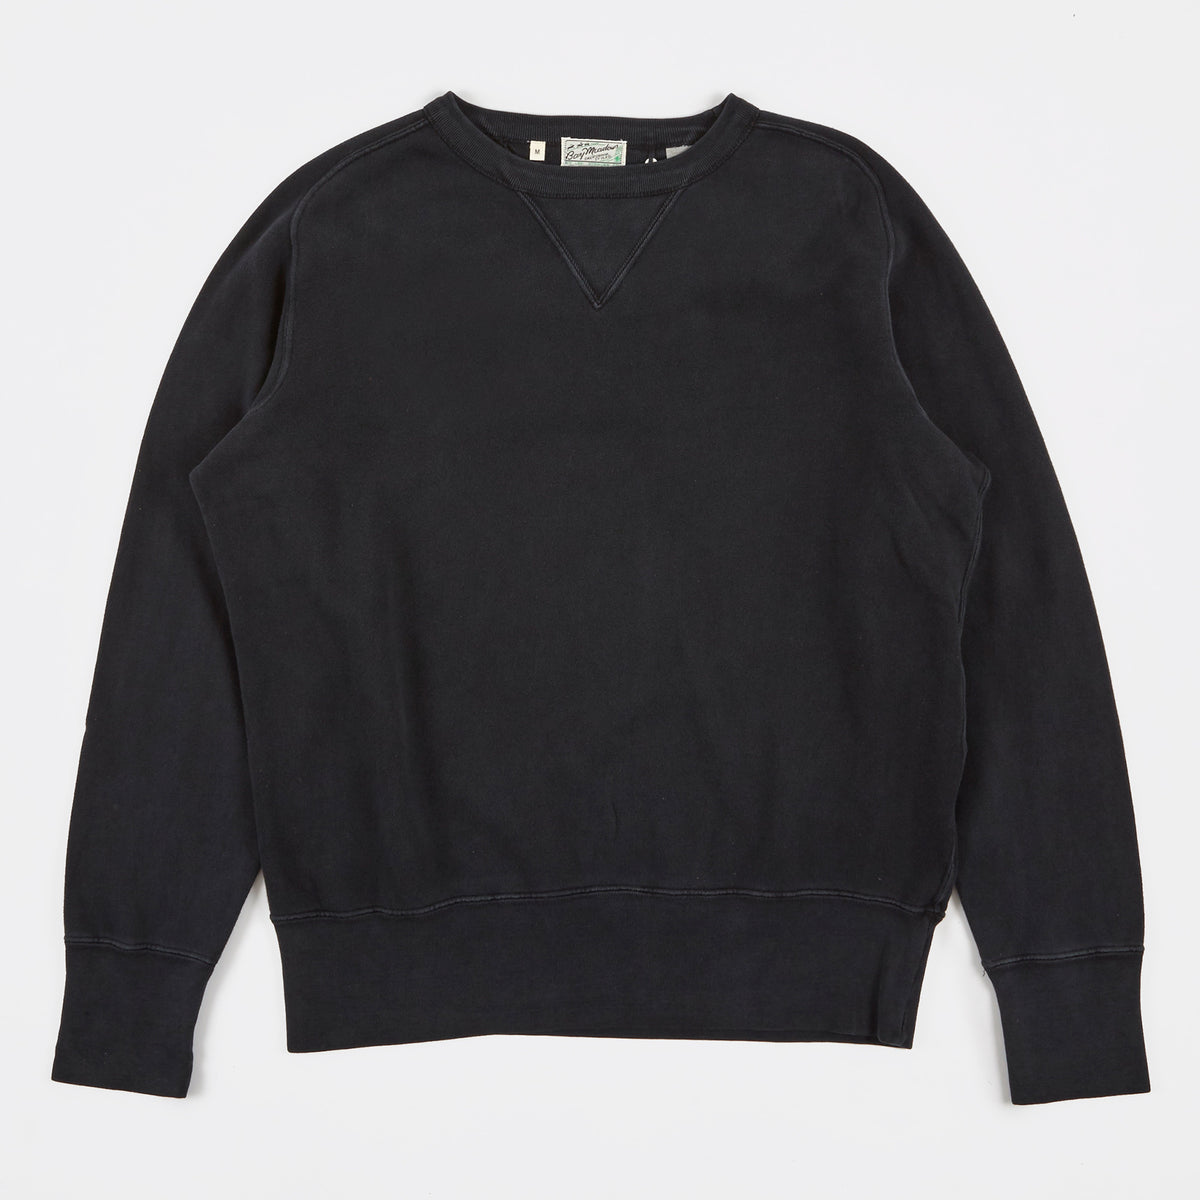 Levis Vintage Clothing Bay Meadows Sweatshirt - Faded Black